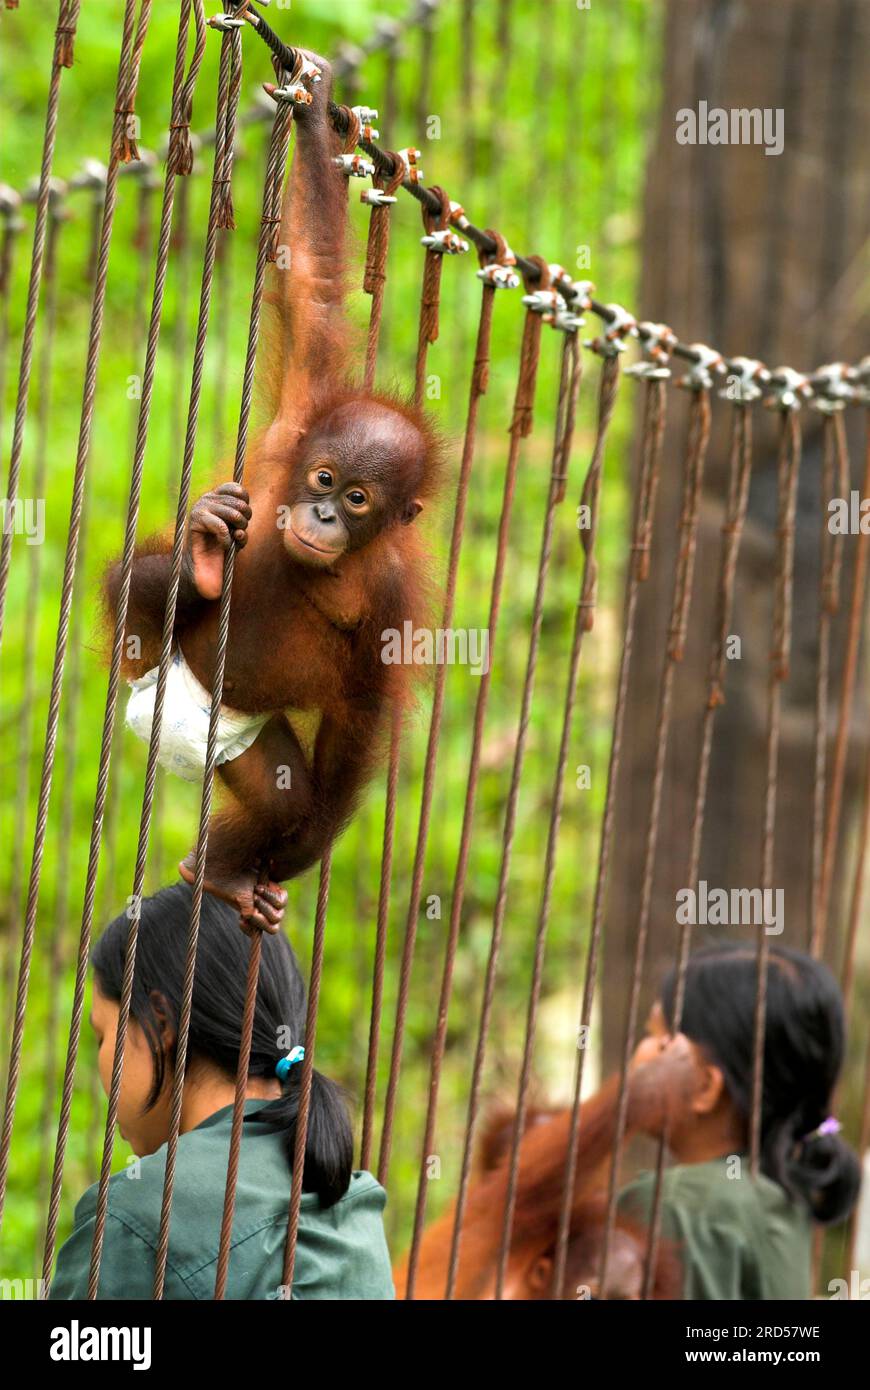 Junger Borneo-Orang-Utan mit Windel, Rehabilitationszentrum für verwaiste Orang-Utans, Samboja-Lestari, Borneo (Pongo pygmaeus pygmaeus), Indonesien Stockfoto